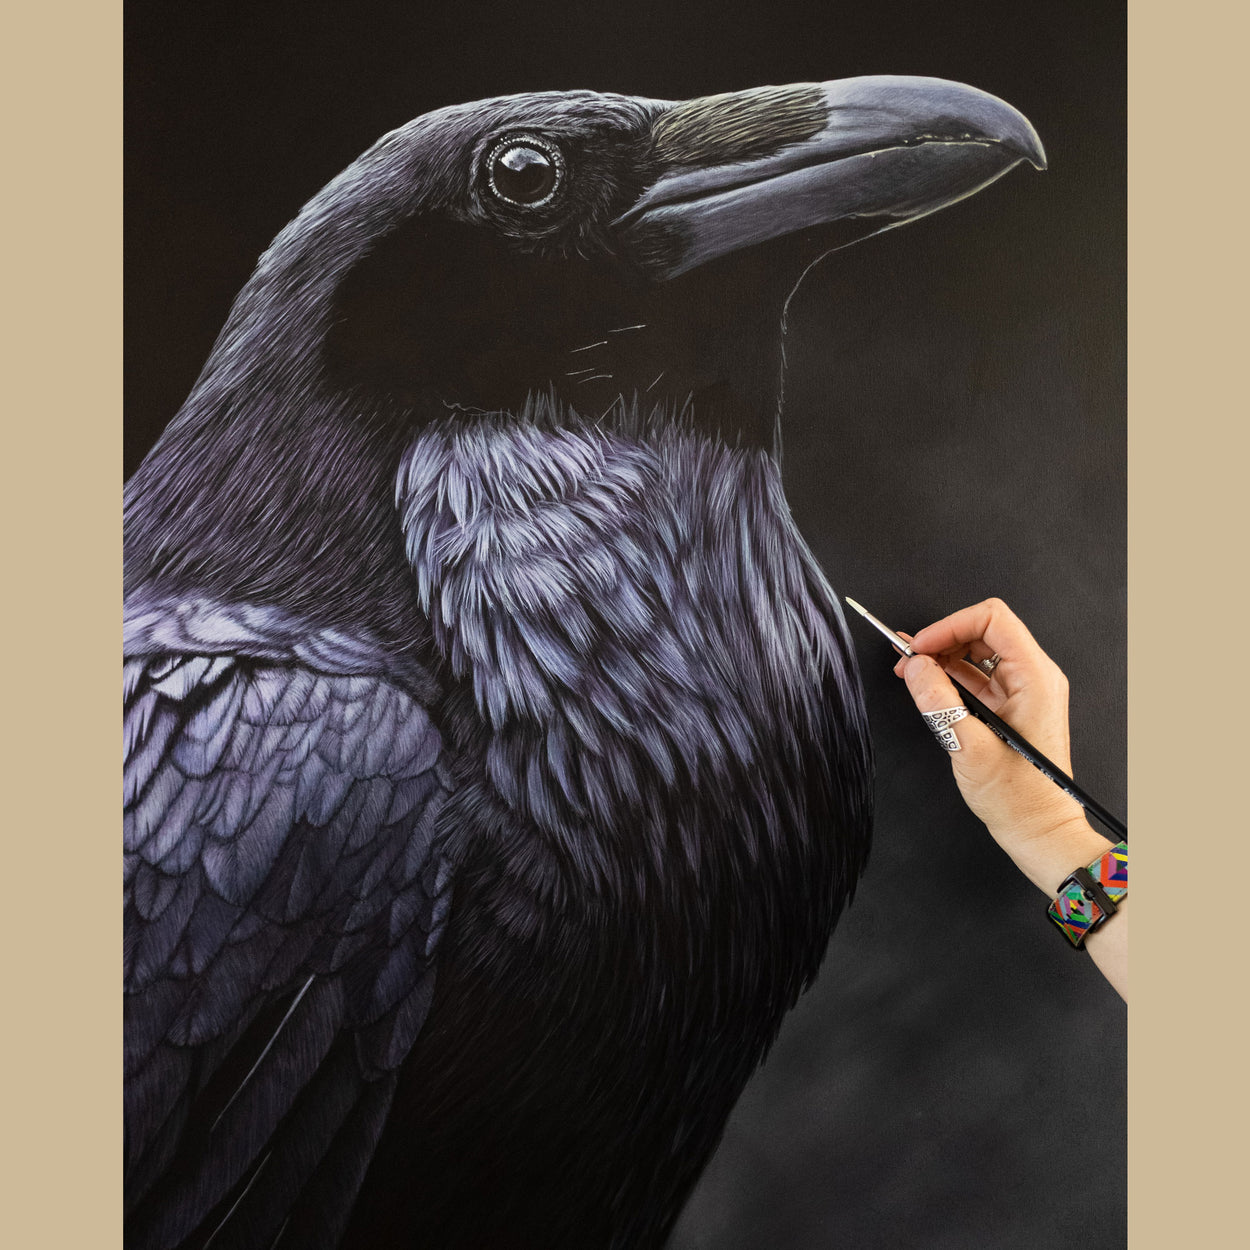 Raven Acrylic Painting in Progress - by Jill Dimond